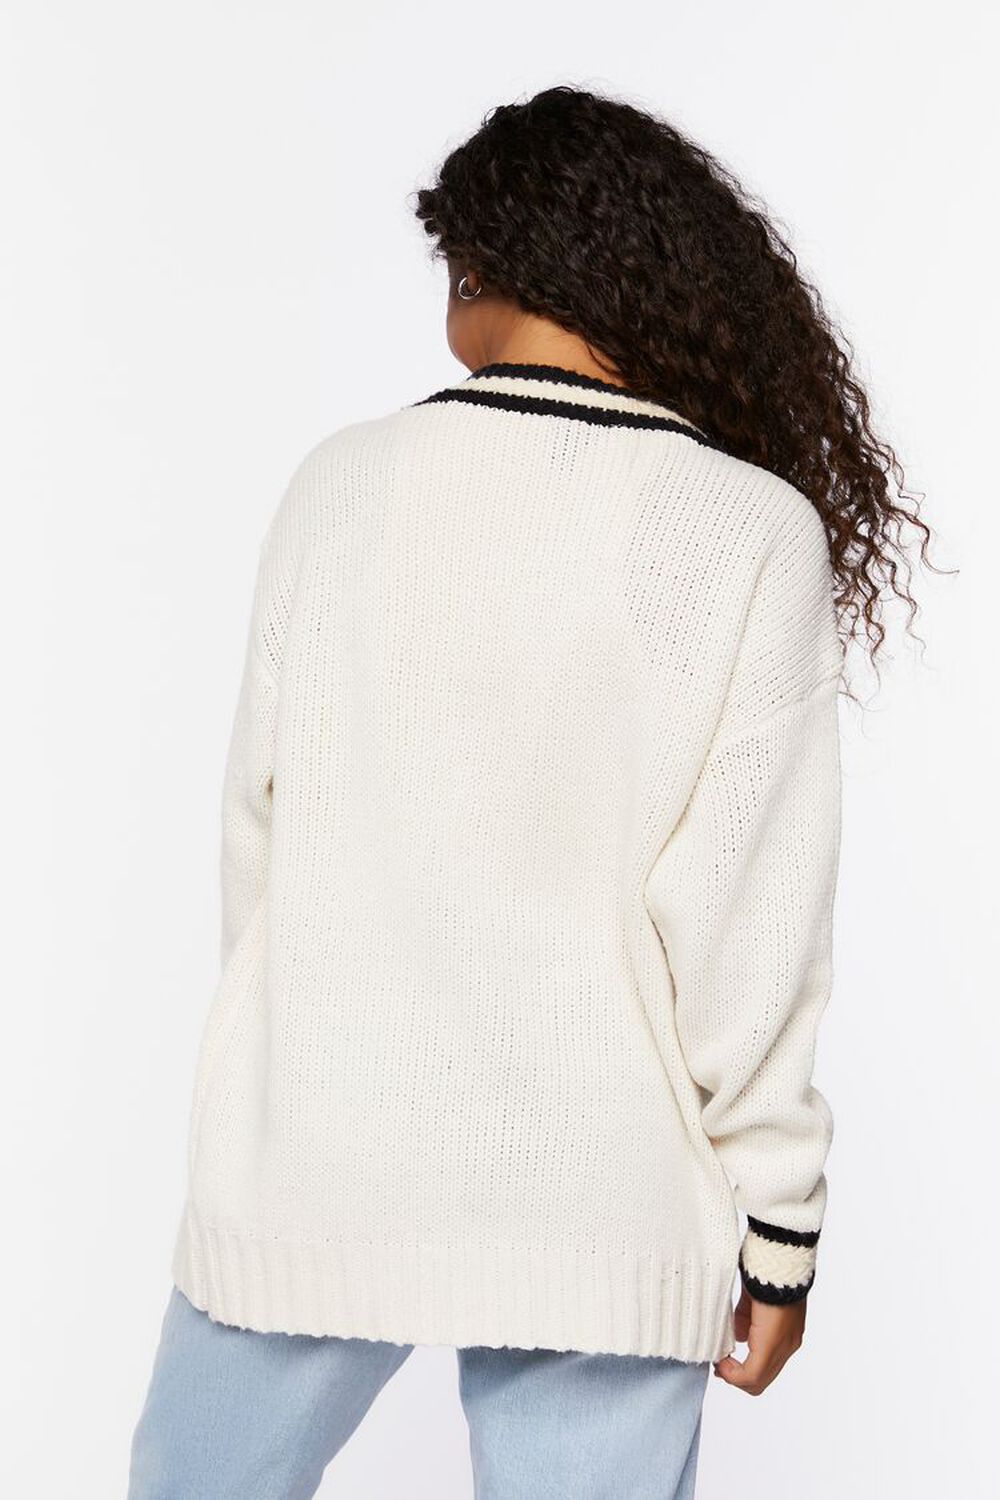 CREAM/MULTI Varsity-Striped Cardigan Sweater, image 3